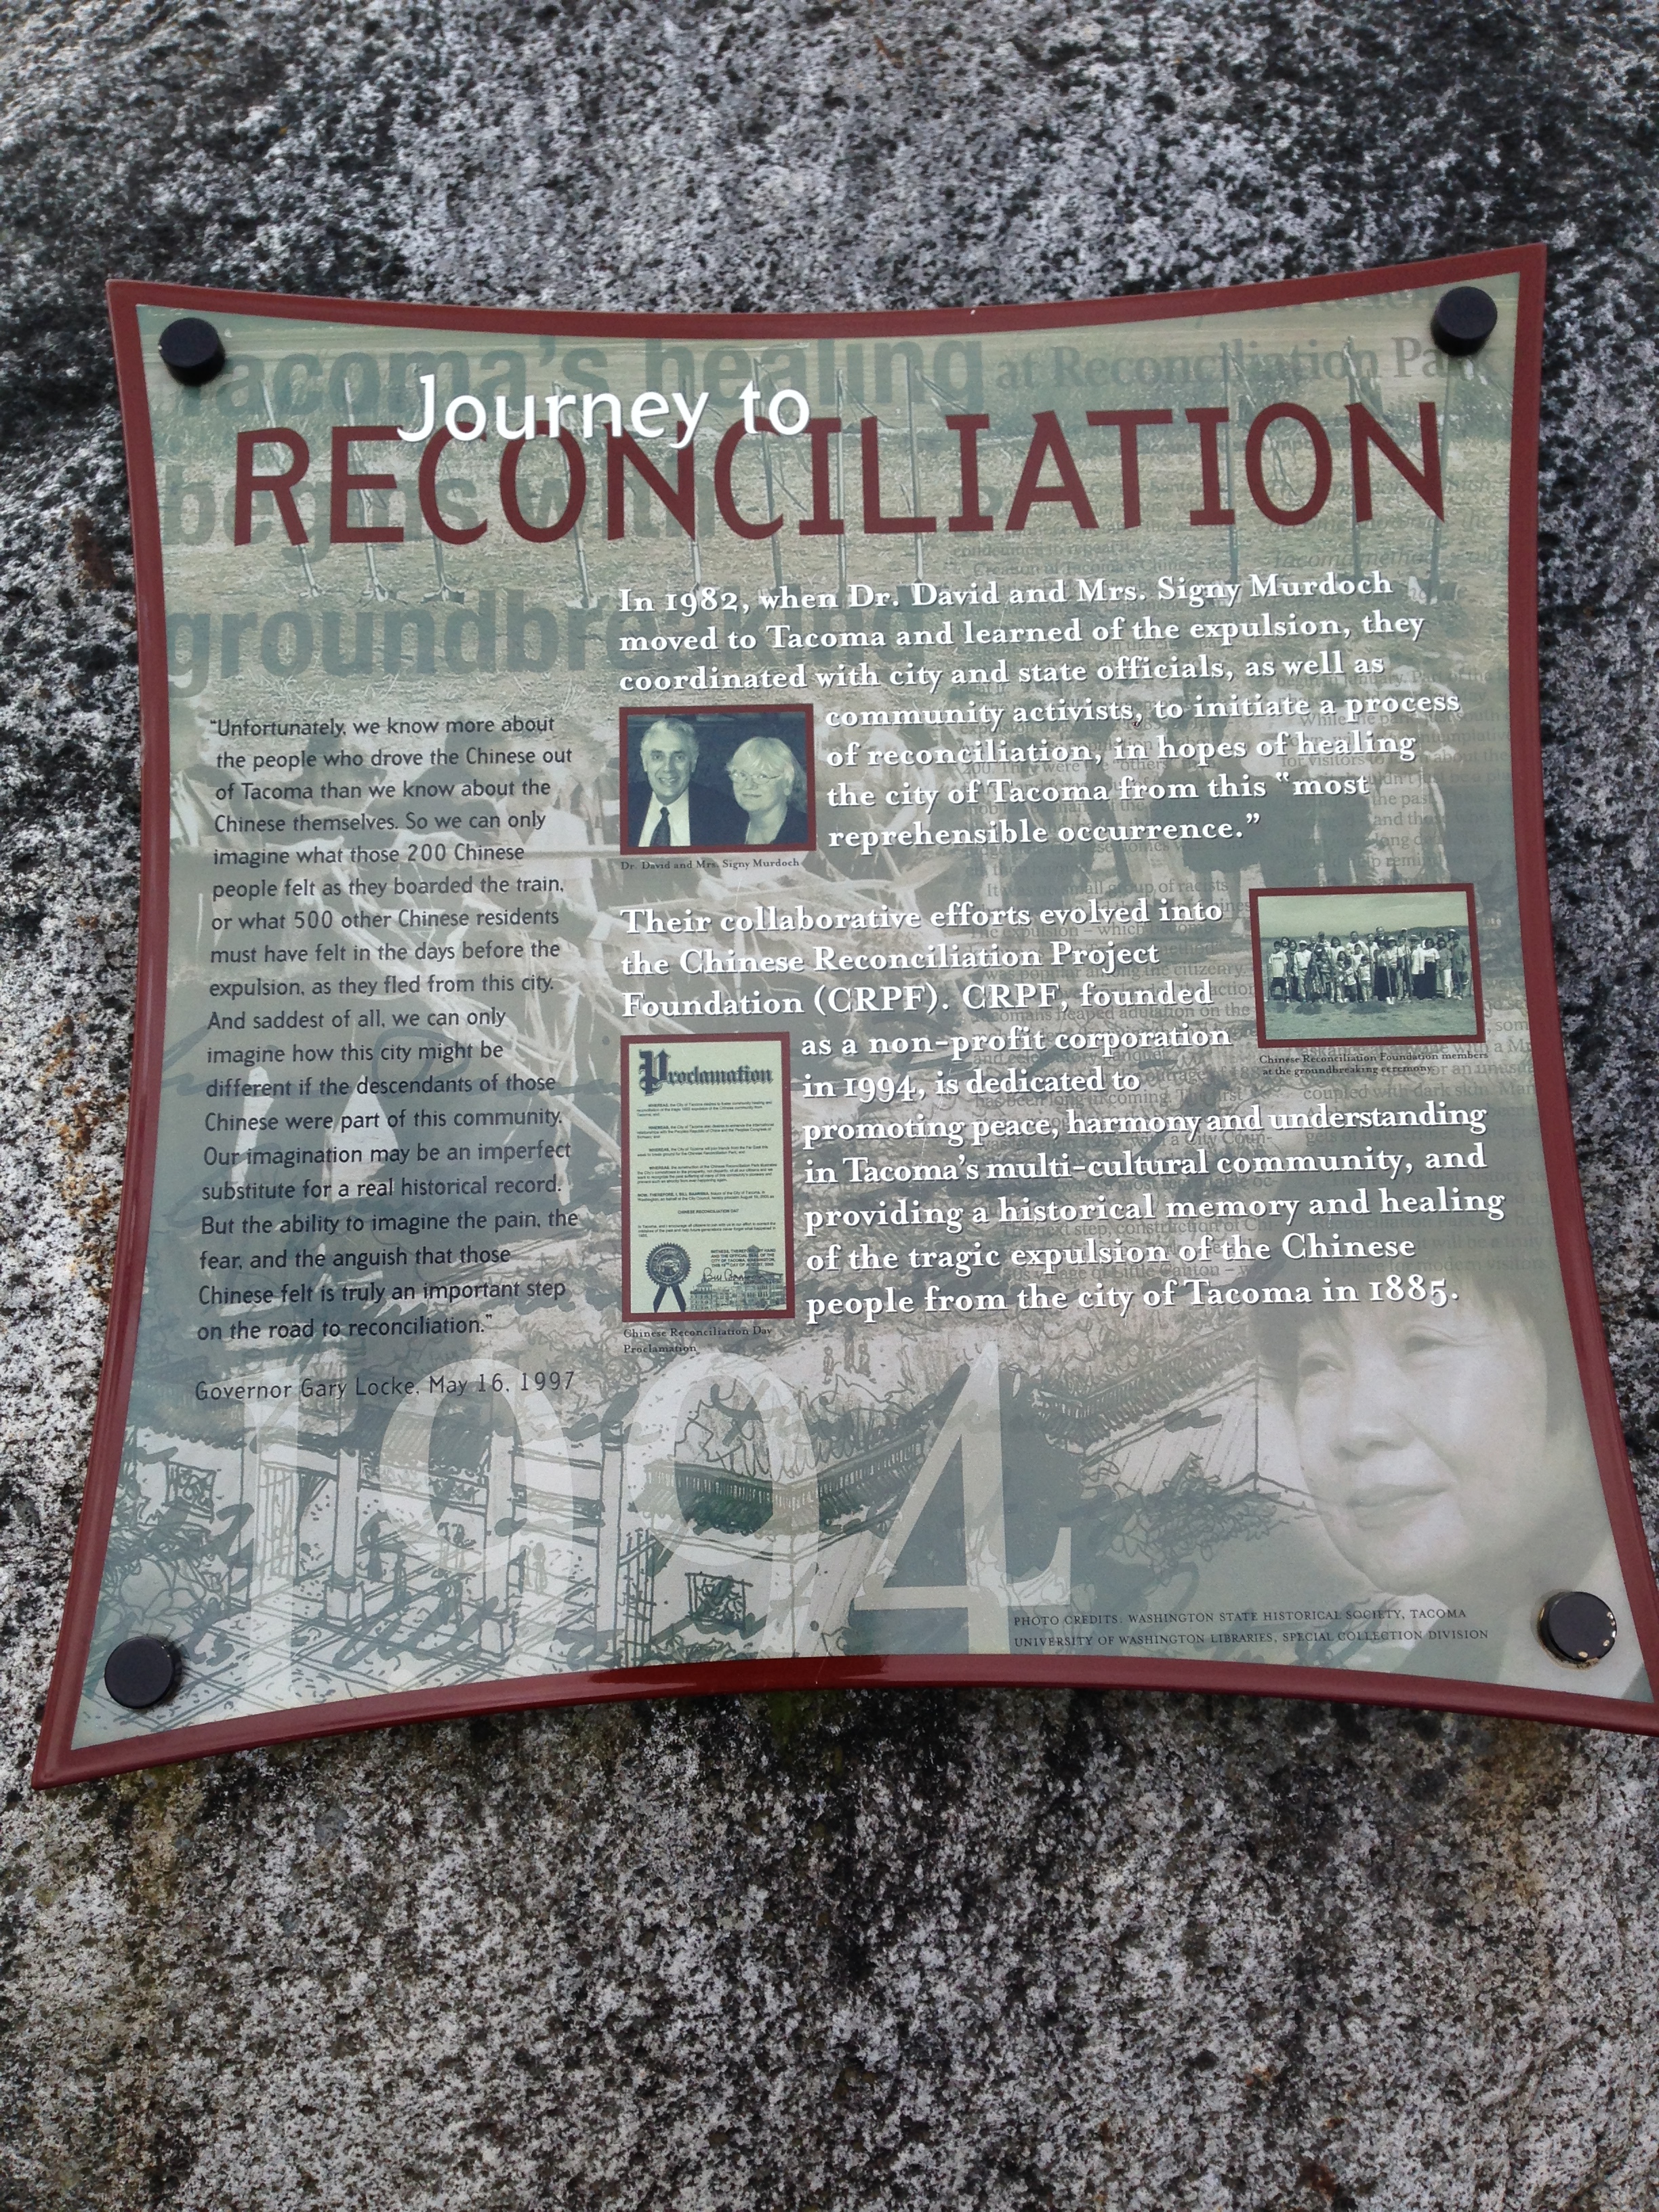  Plaque detailing the Reconciliation process and the construction of Reconciliation Park. Cesare Bigolin. 